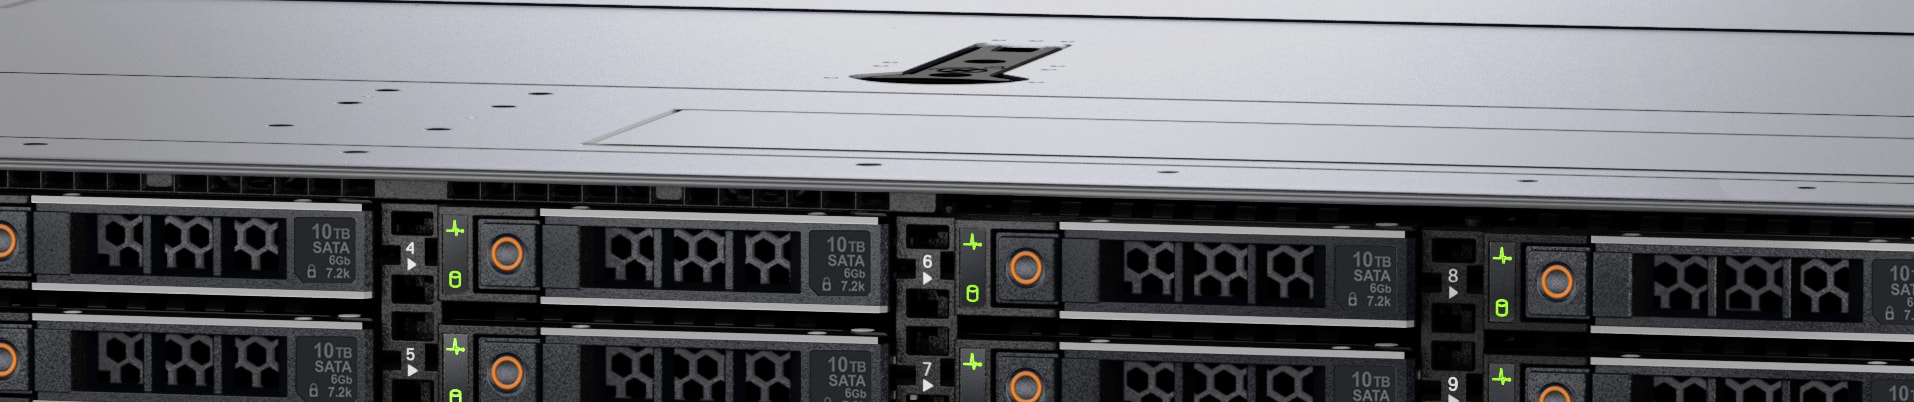 Dell Technologies PowerEdge Rack Servers